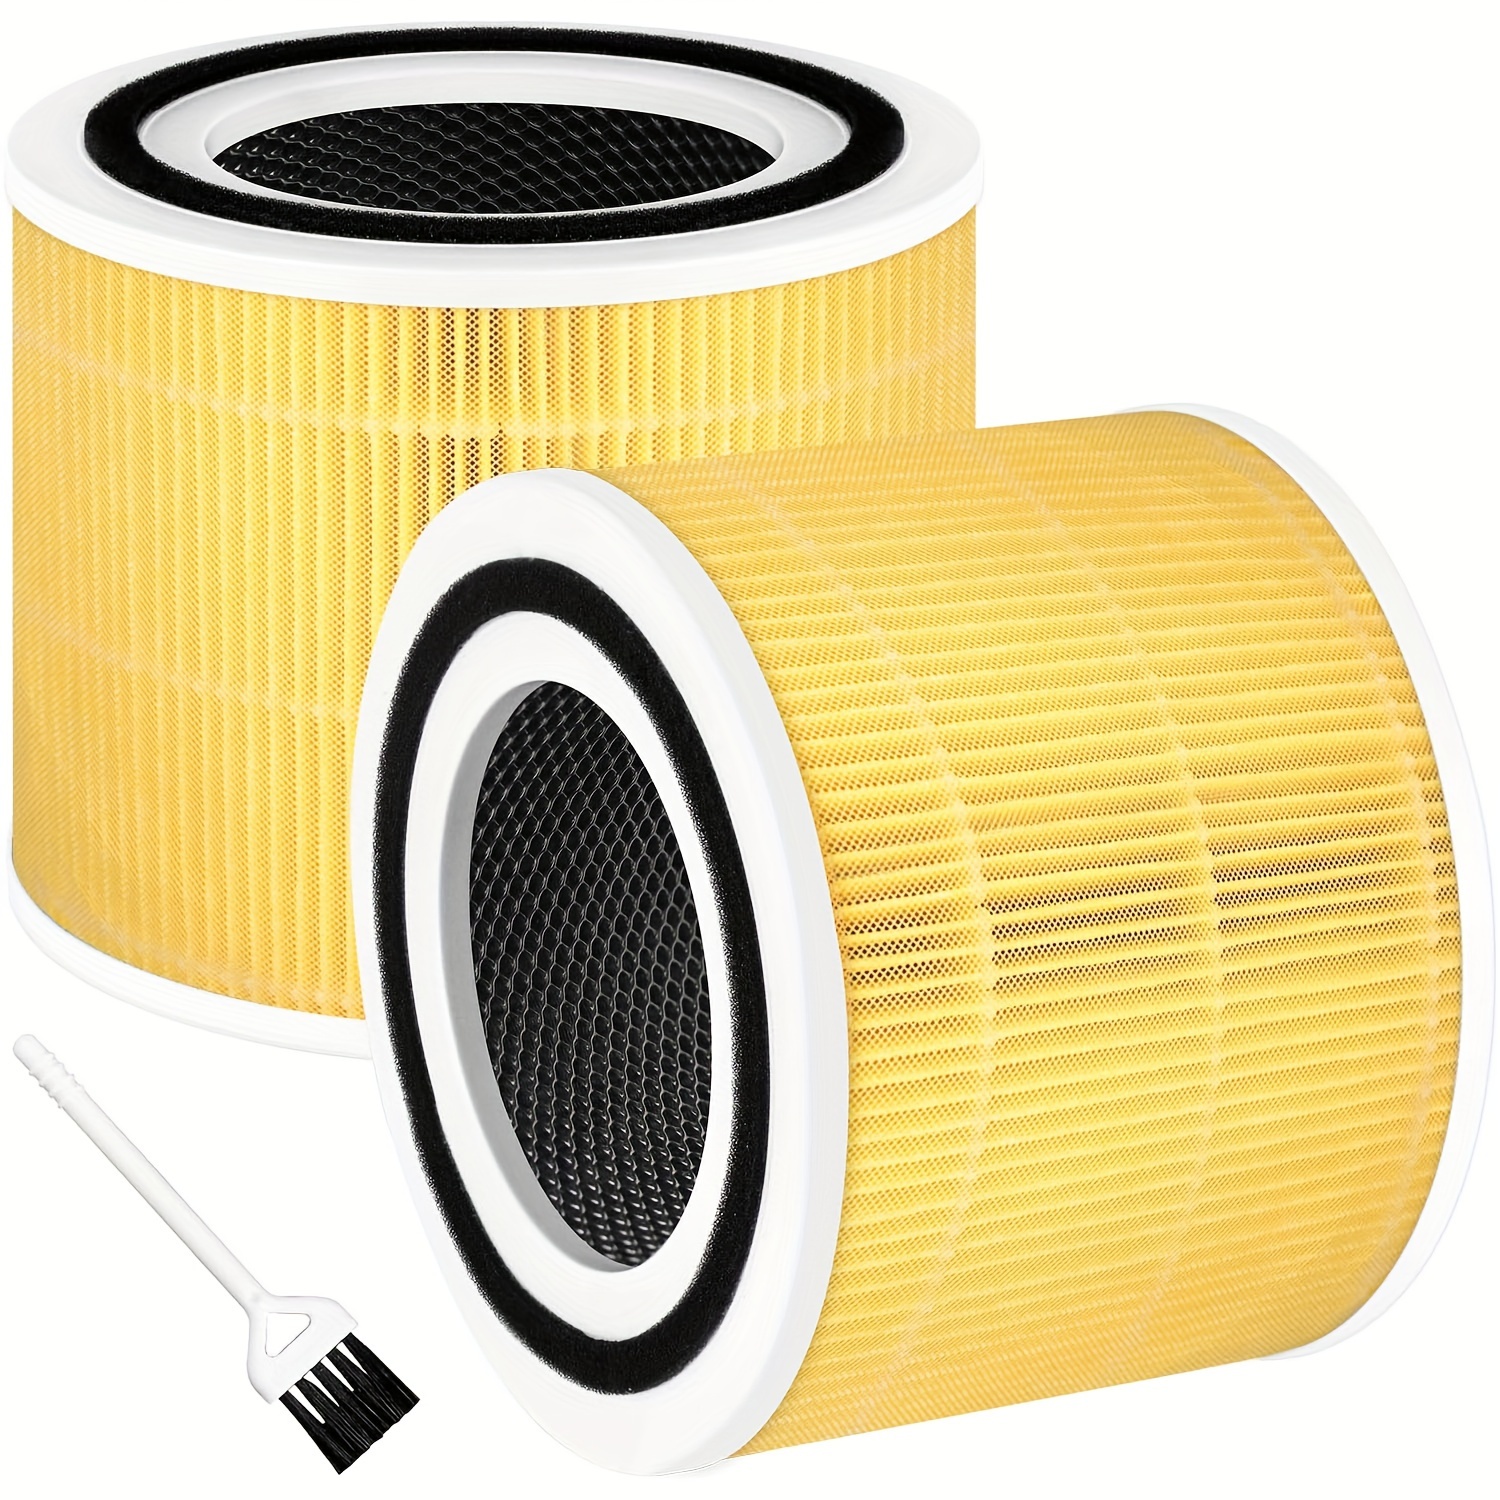 Levoit Air Purifier LV-PUR131-RF Replacement Filter True-Hepa &